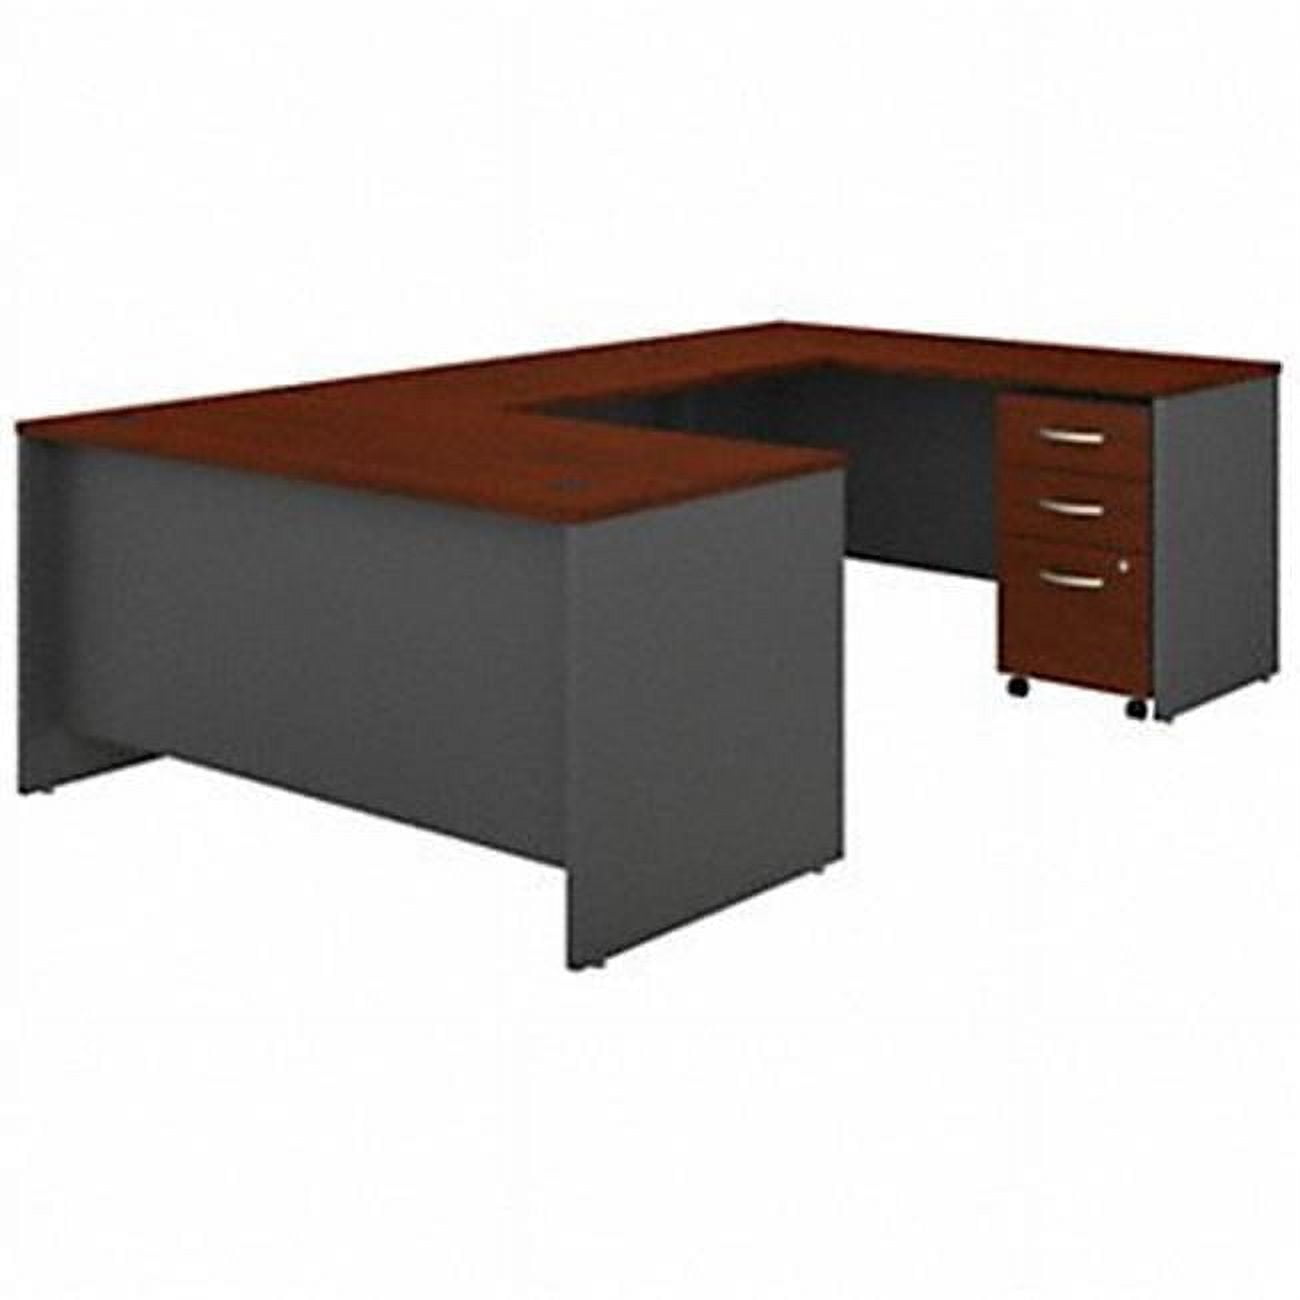 Src148hcsu 60 In. Series C U Shaped Desk With 3 Drawer Mobile File Cabinet, Hansen Cherry